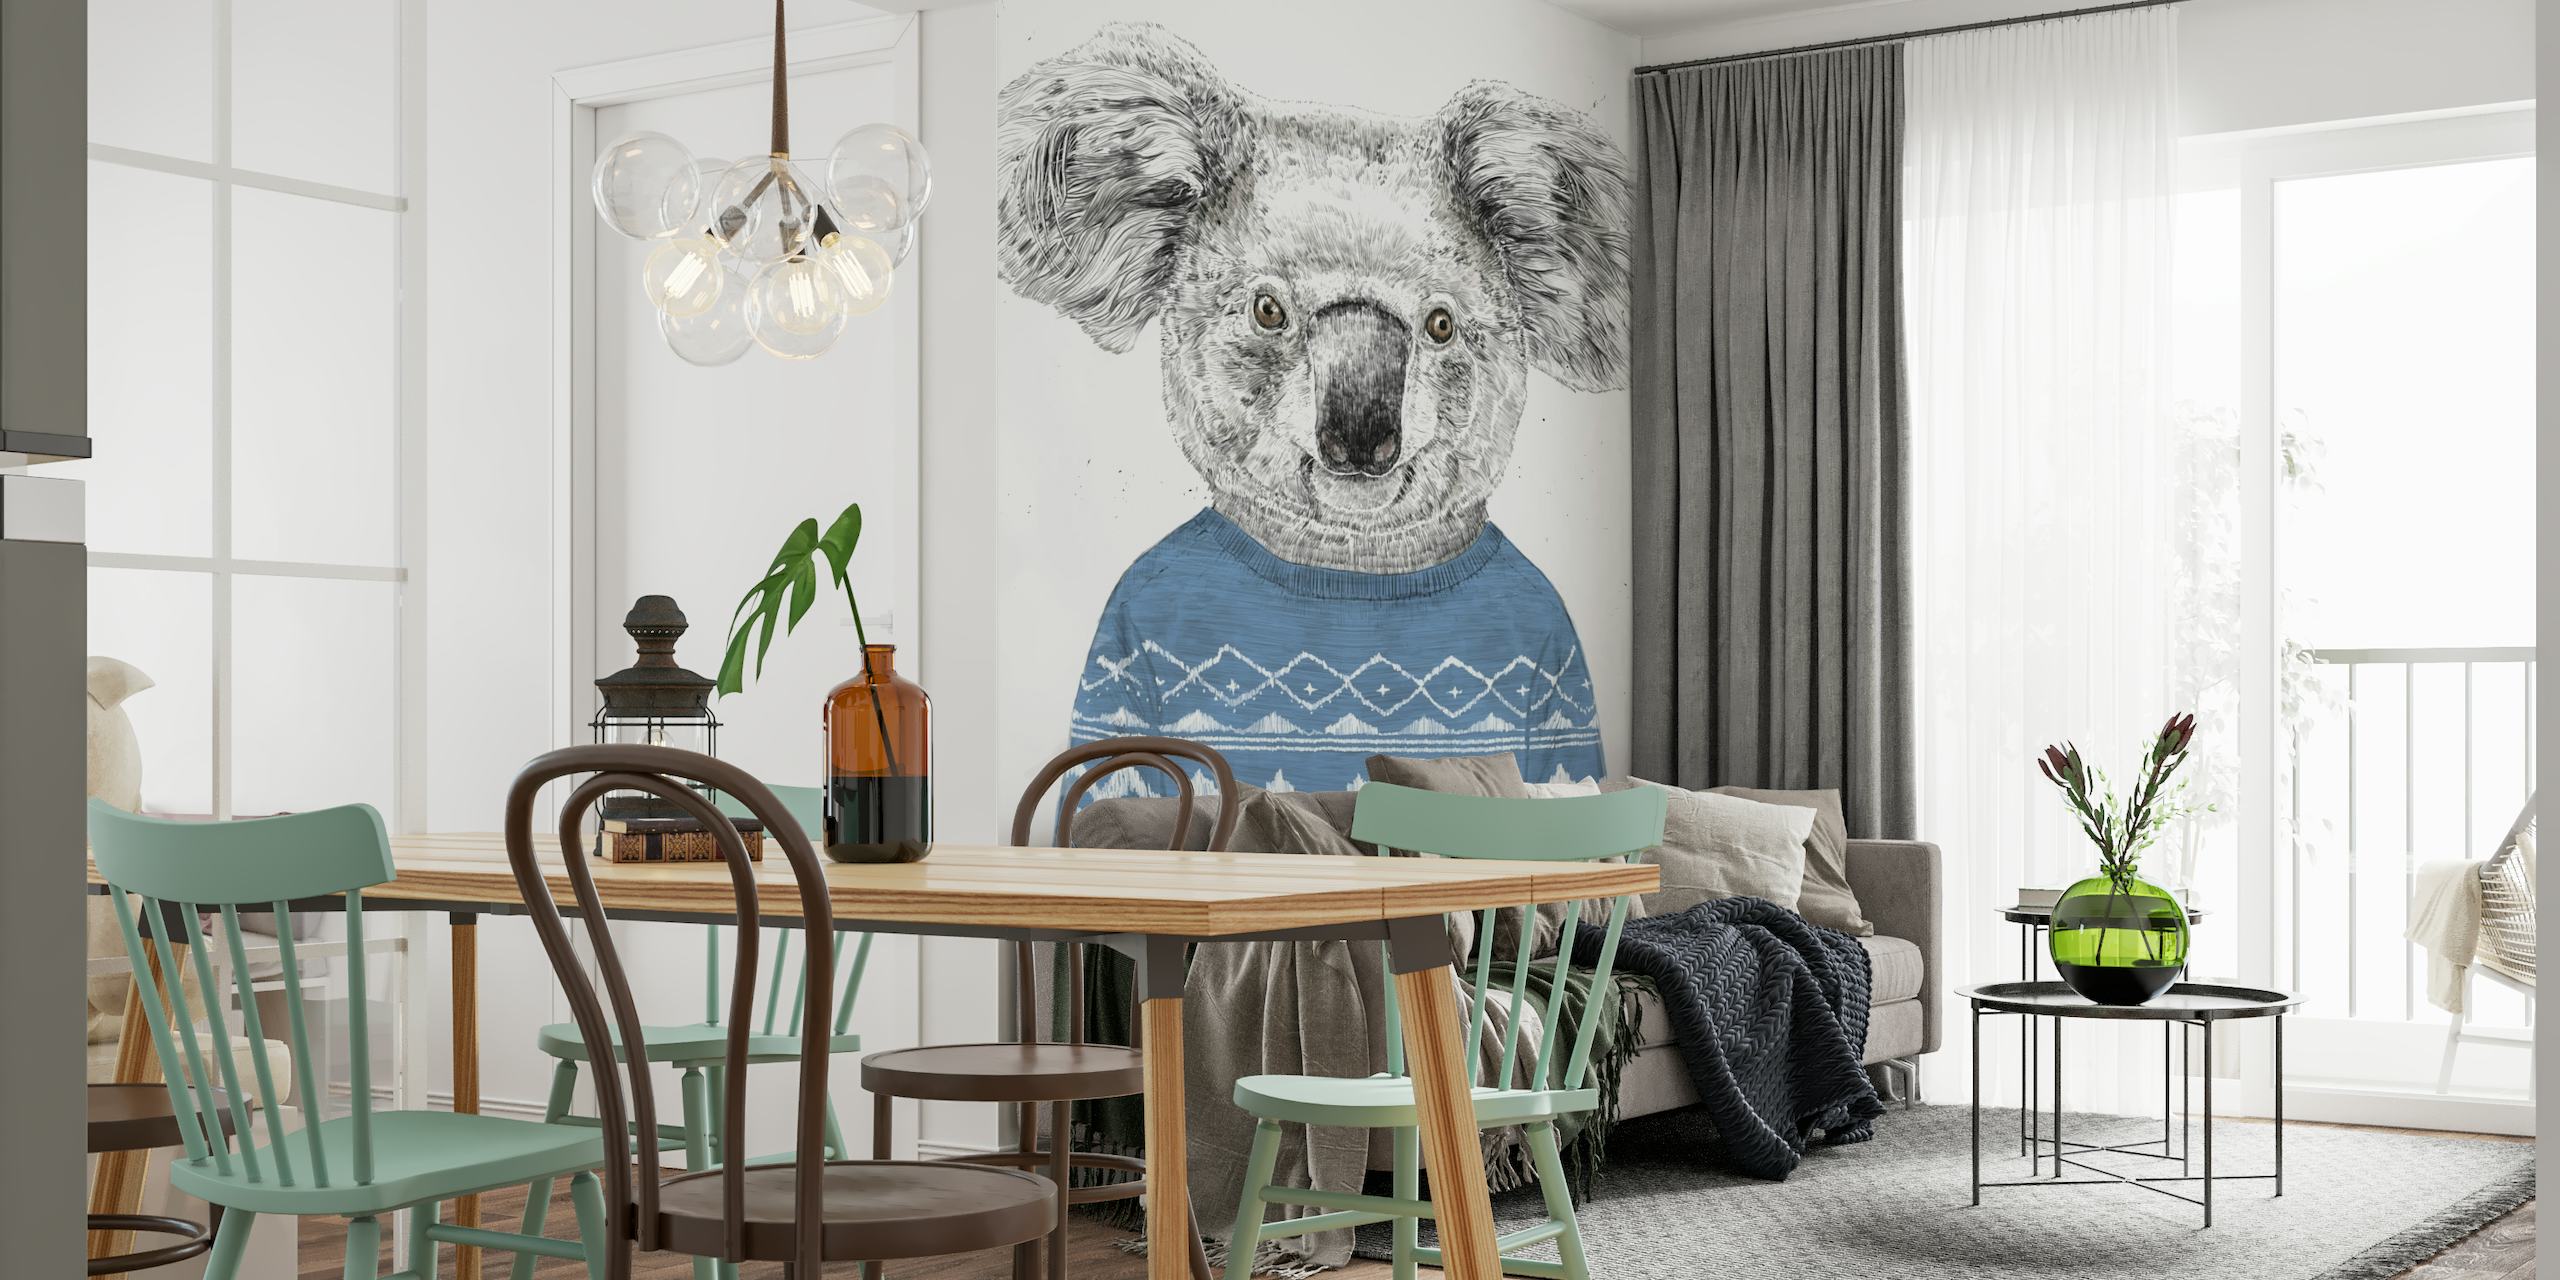 Winter koala papel pintado